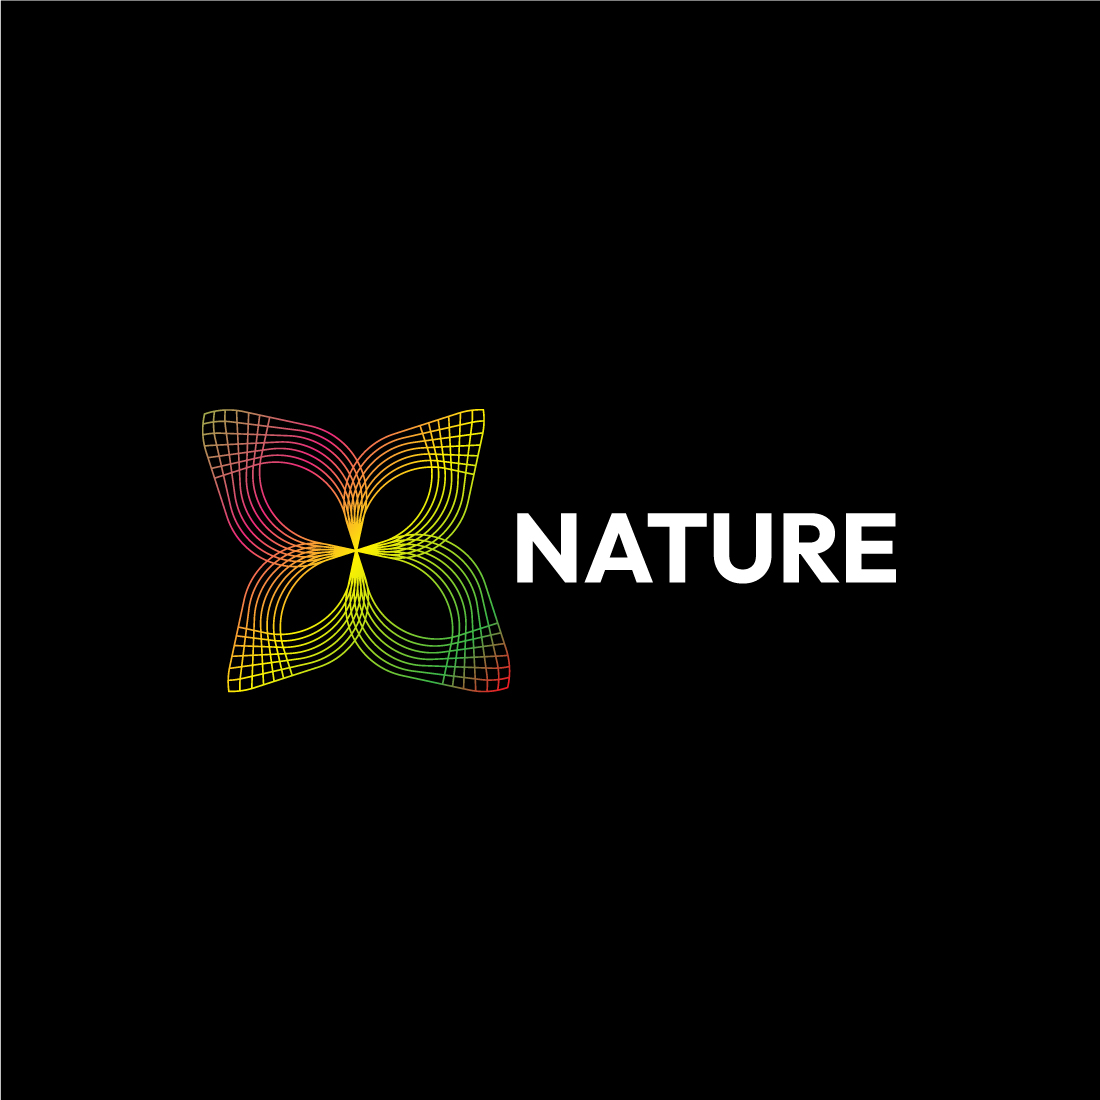 Line Art Nature, Food, and Leaf Logo Designs Bundle preview image.